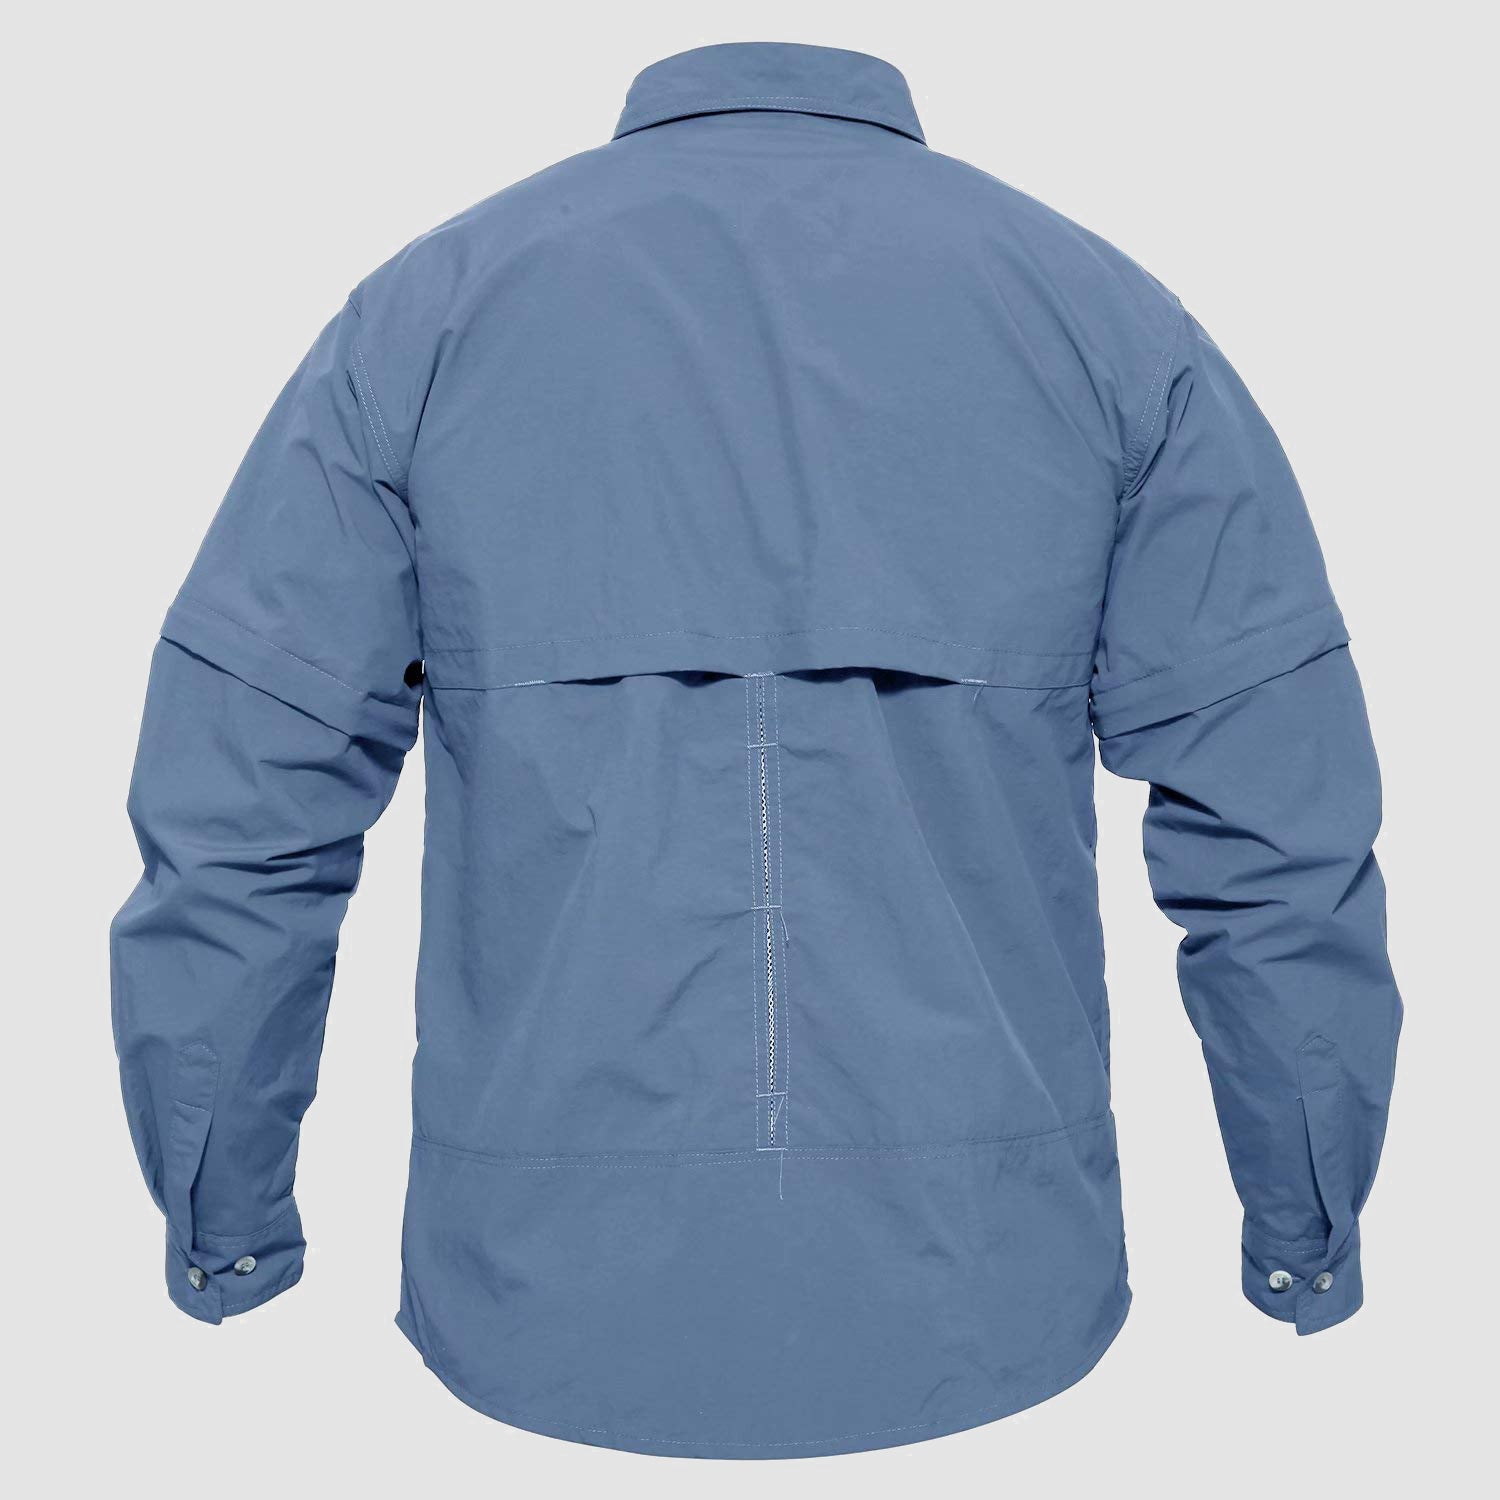 Mens Fishing Hiking Shirts with Detachable Sleeves Long/Short